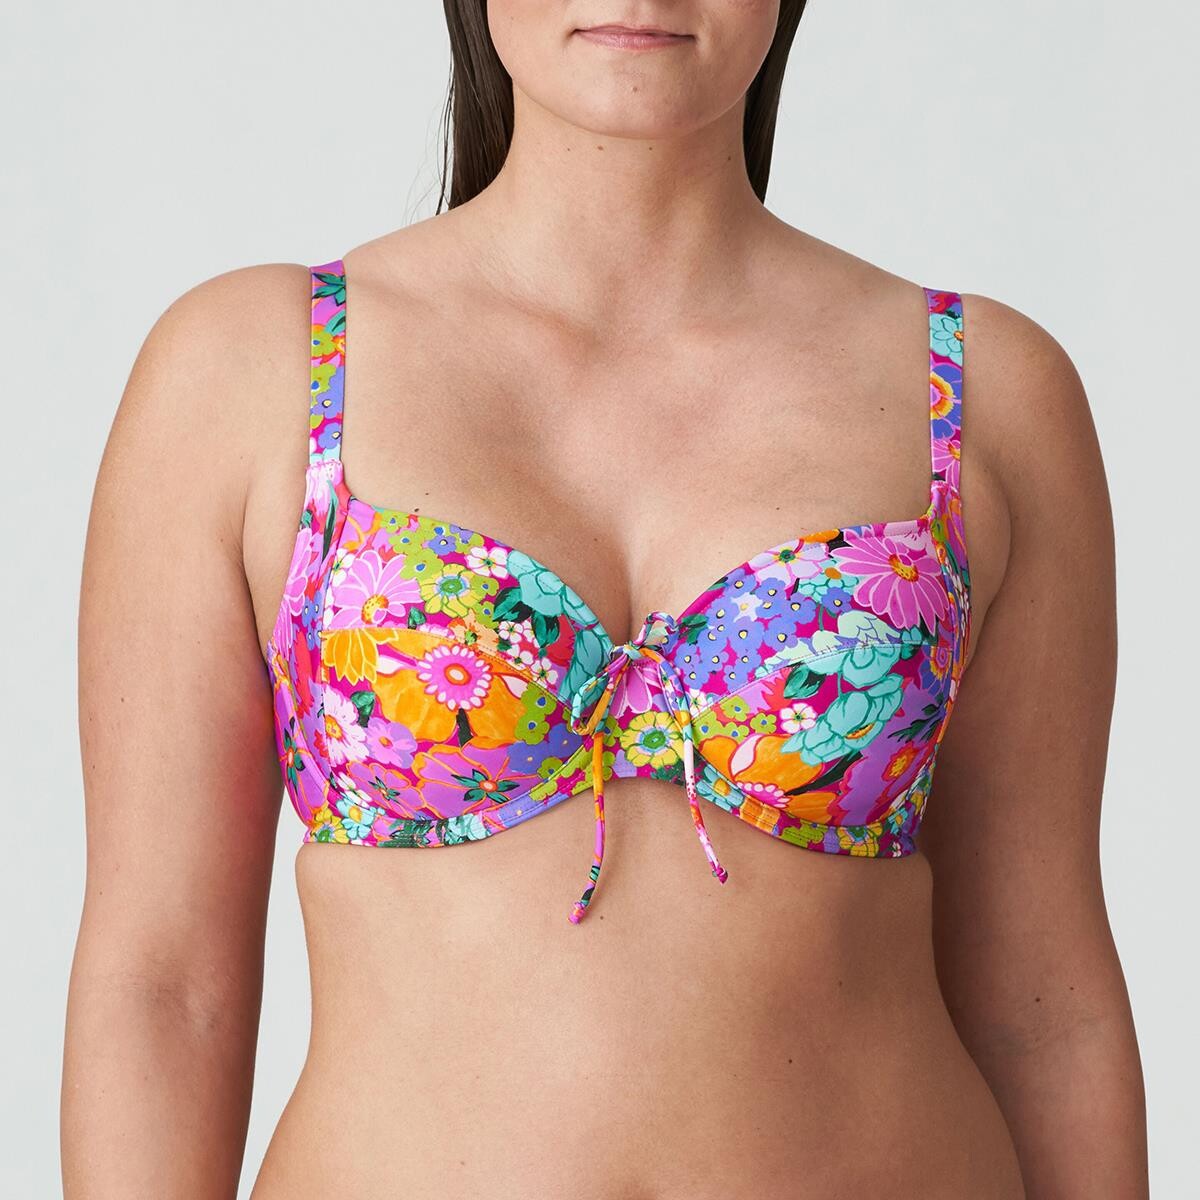 Primadonna Najac Bikini Top Med Bøjle Flx, Farve: Multicolor Explosion, Størrelse: 95G, Dame